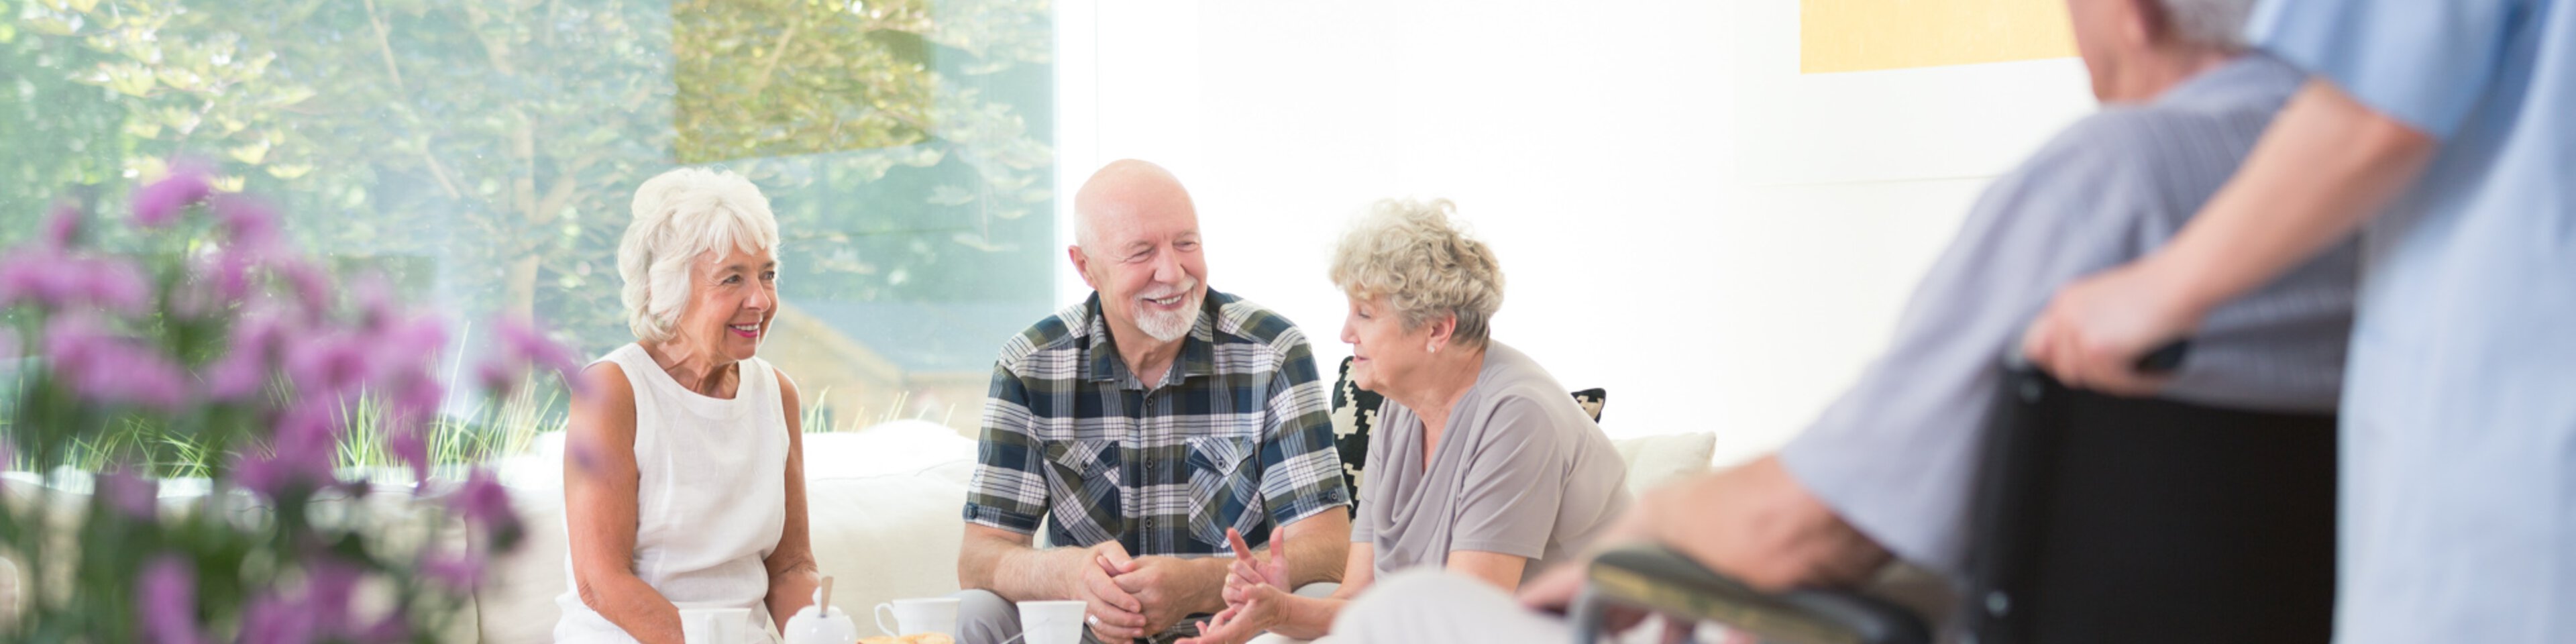 Senioren in einem Altenheim | © Photographee.eu - Shutterstock